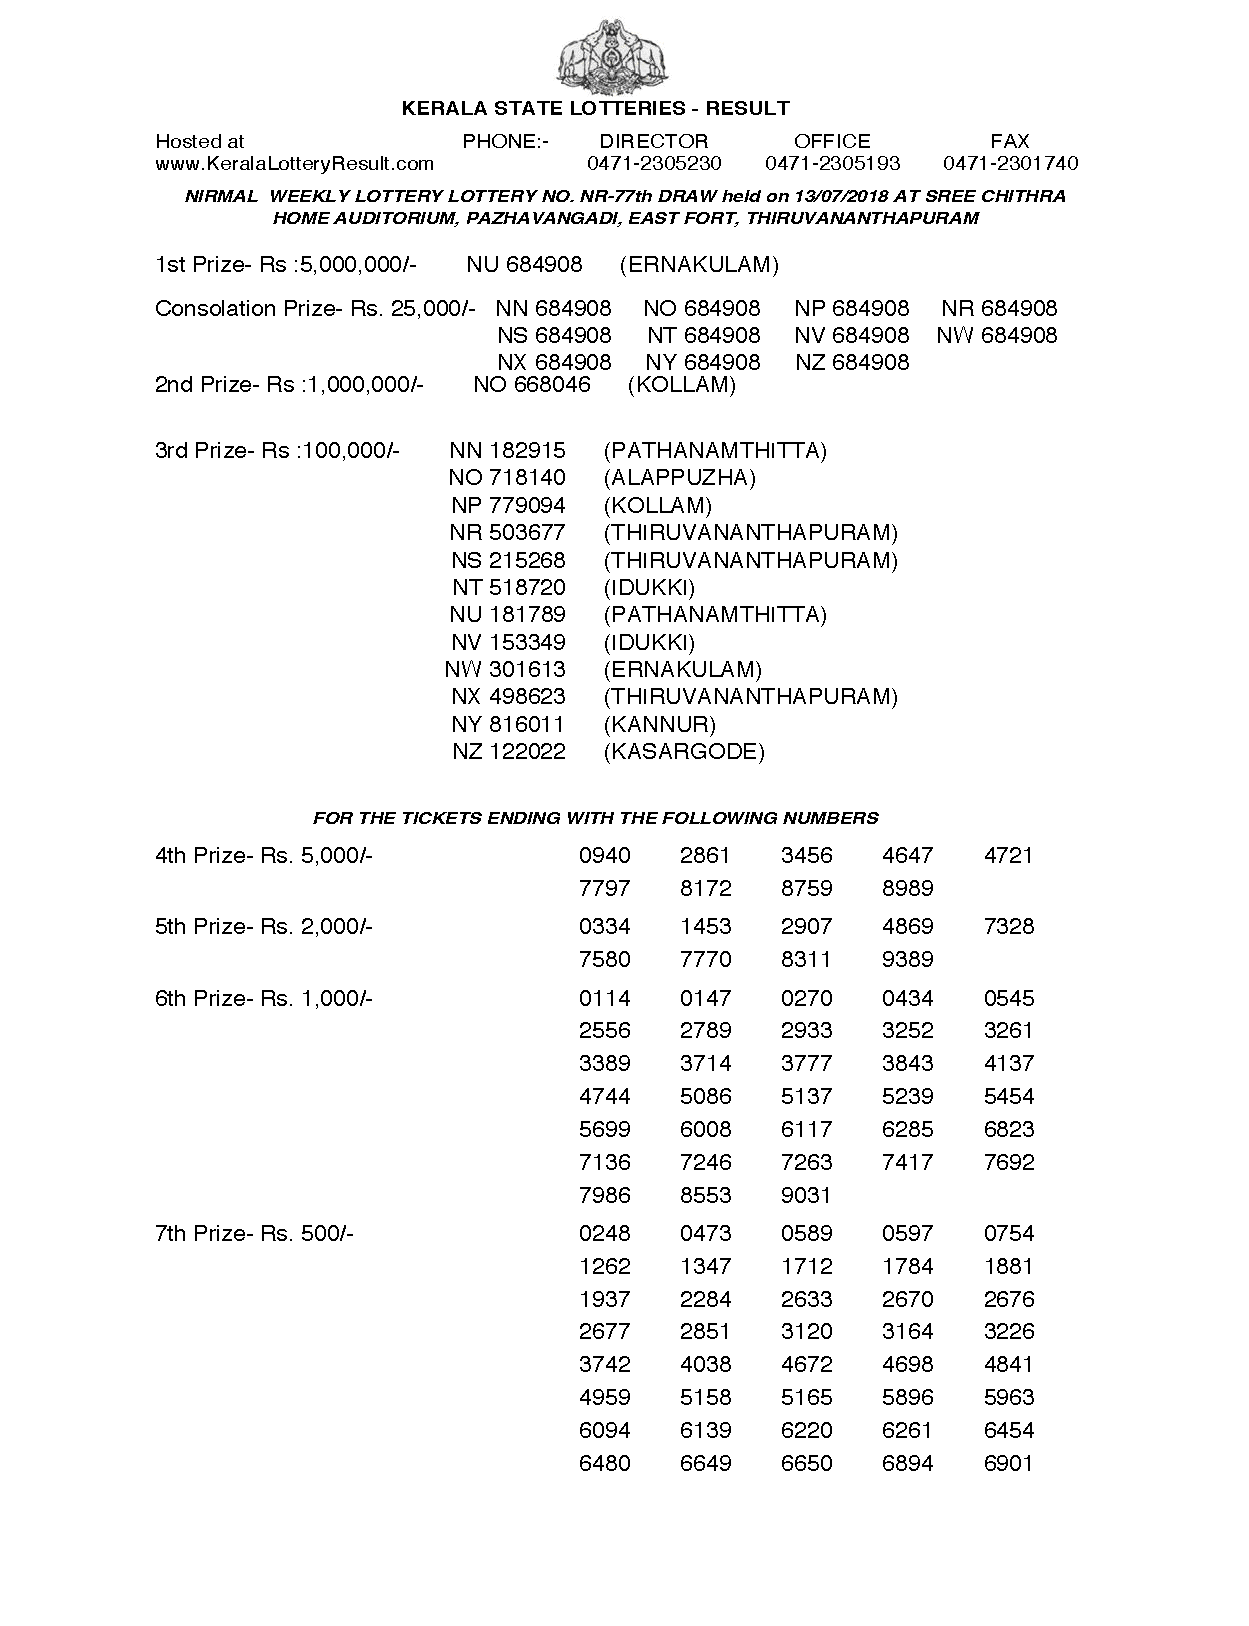 Nirmal NR77 Kerala Lottery Results Screenshot: Page 1